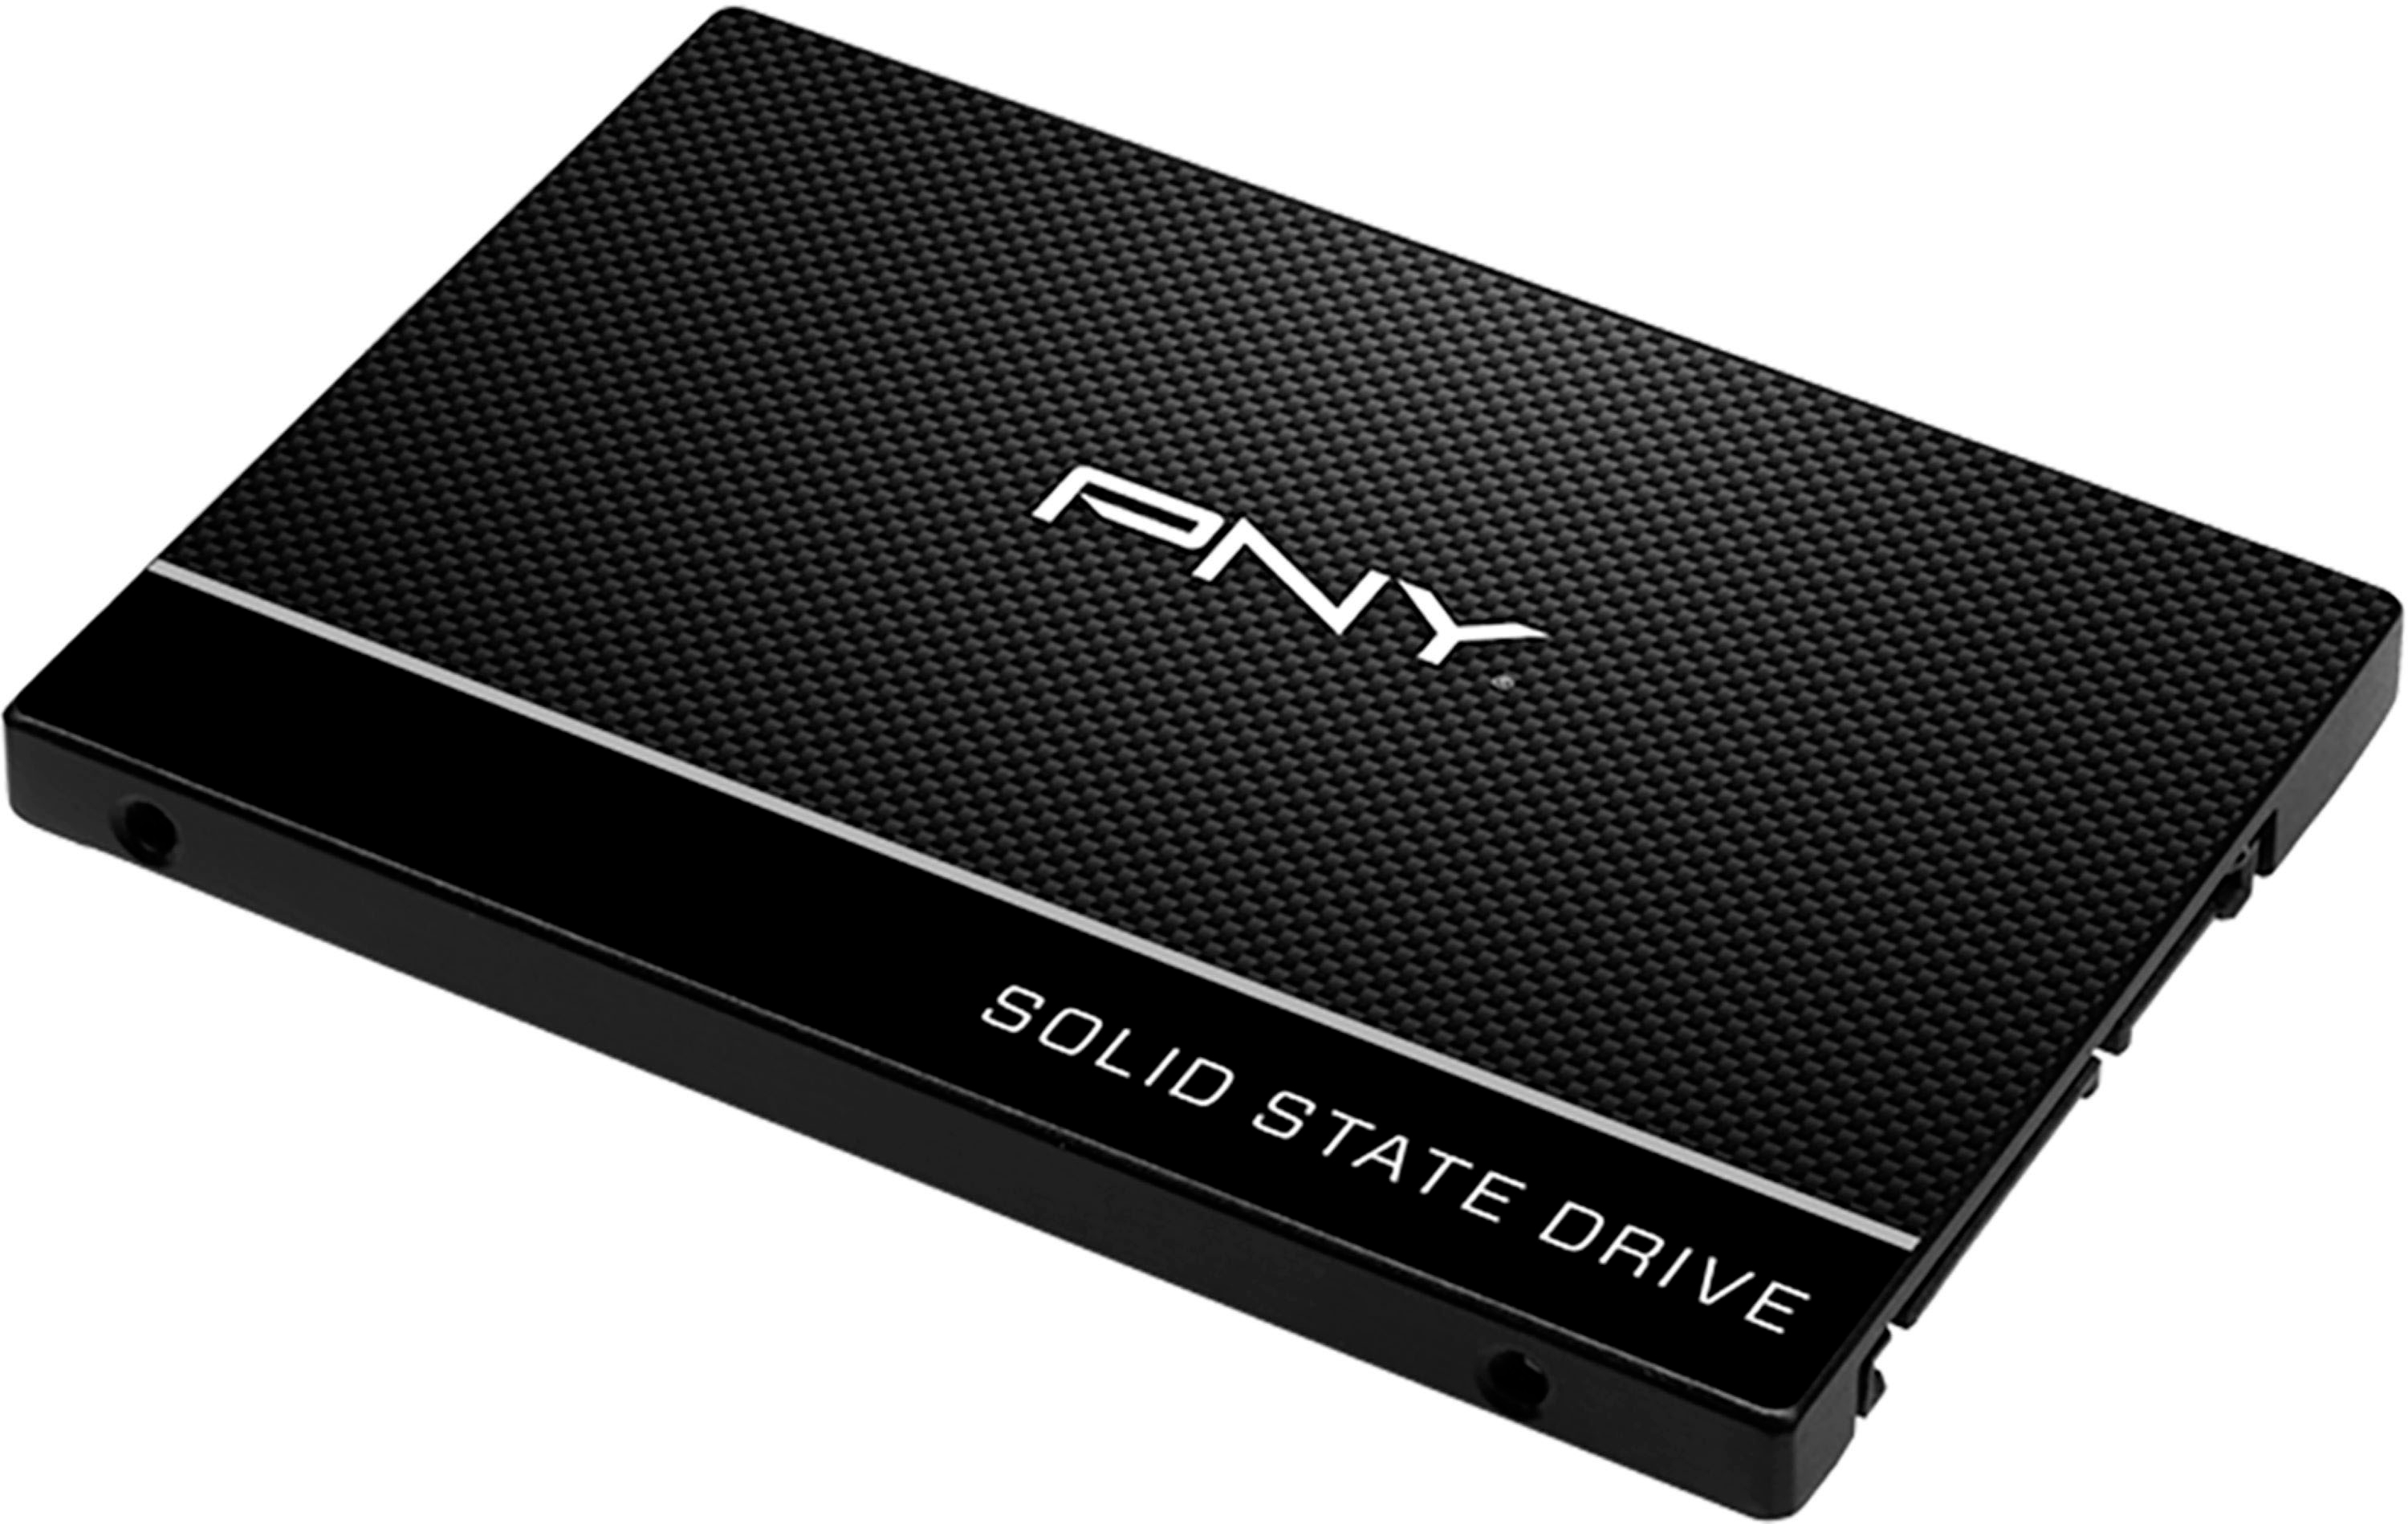 Shop CS900 2.5'' SATA III SSD, Solid State Drives